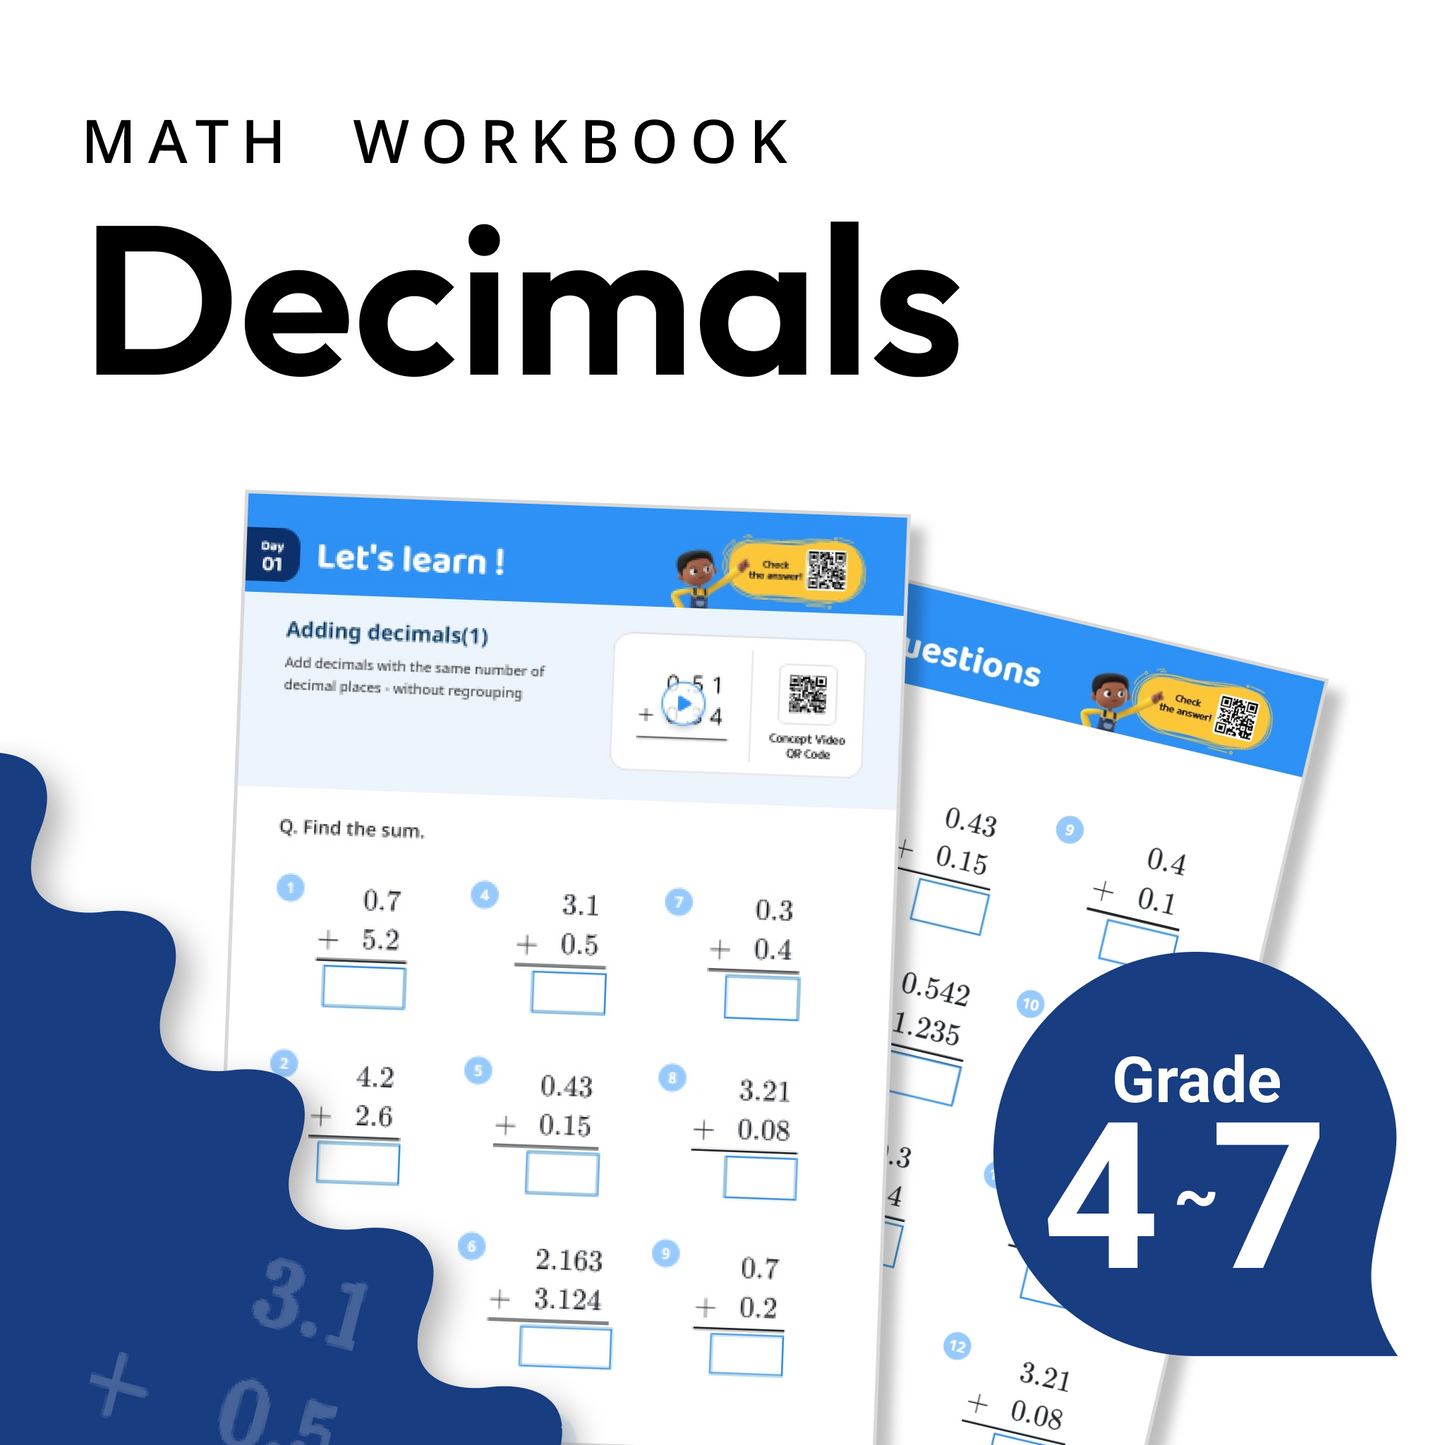 Mixed_operations-_fractions_and_decimals